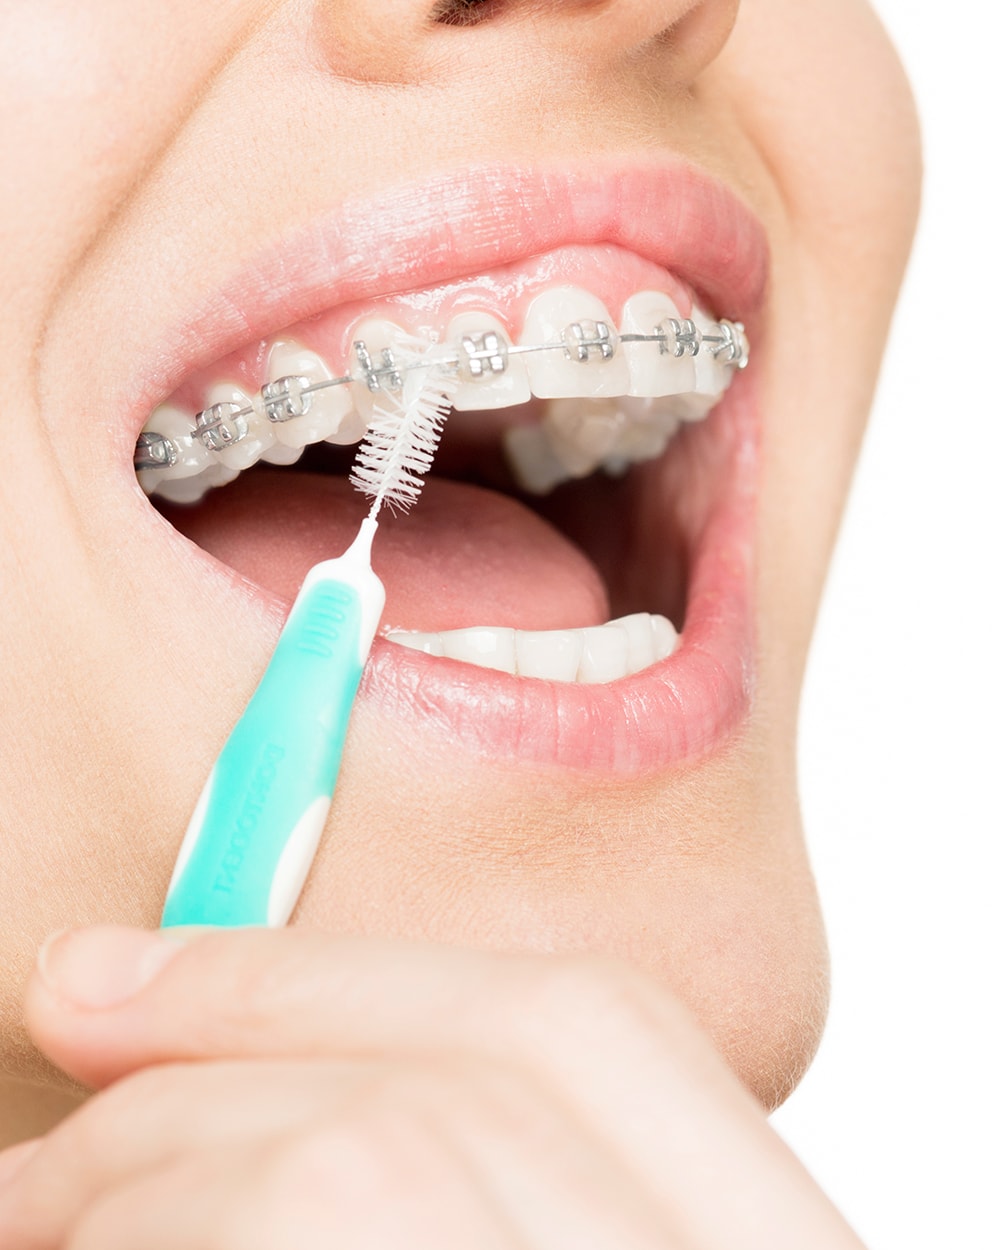 Flossing teeth with braces.